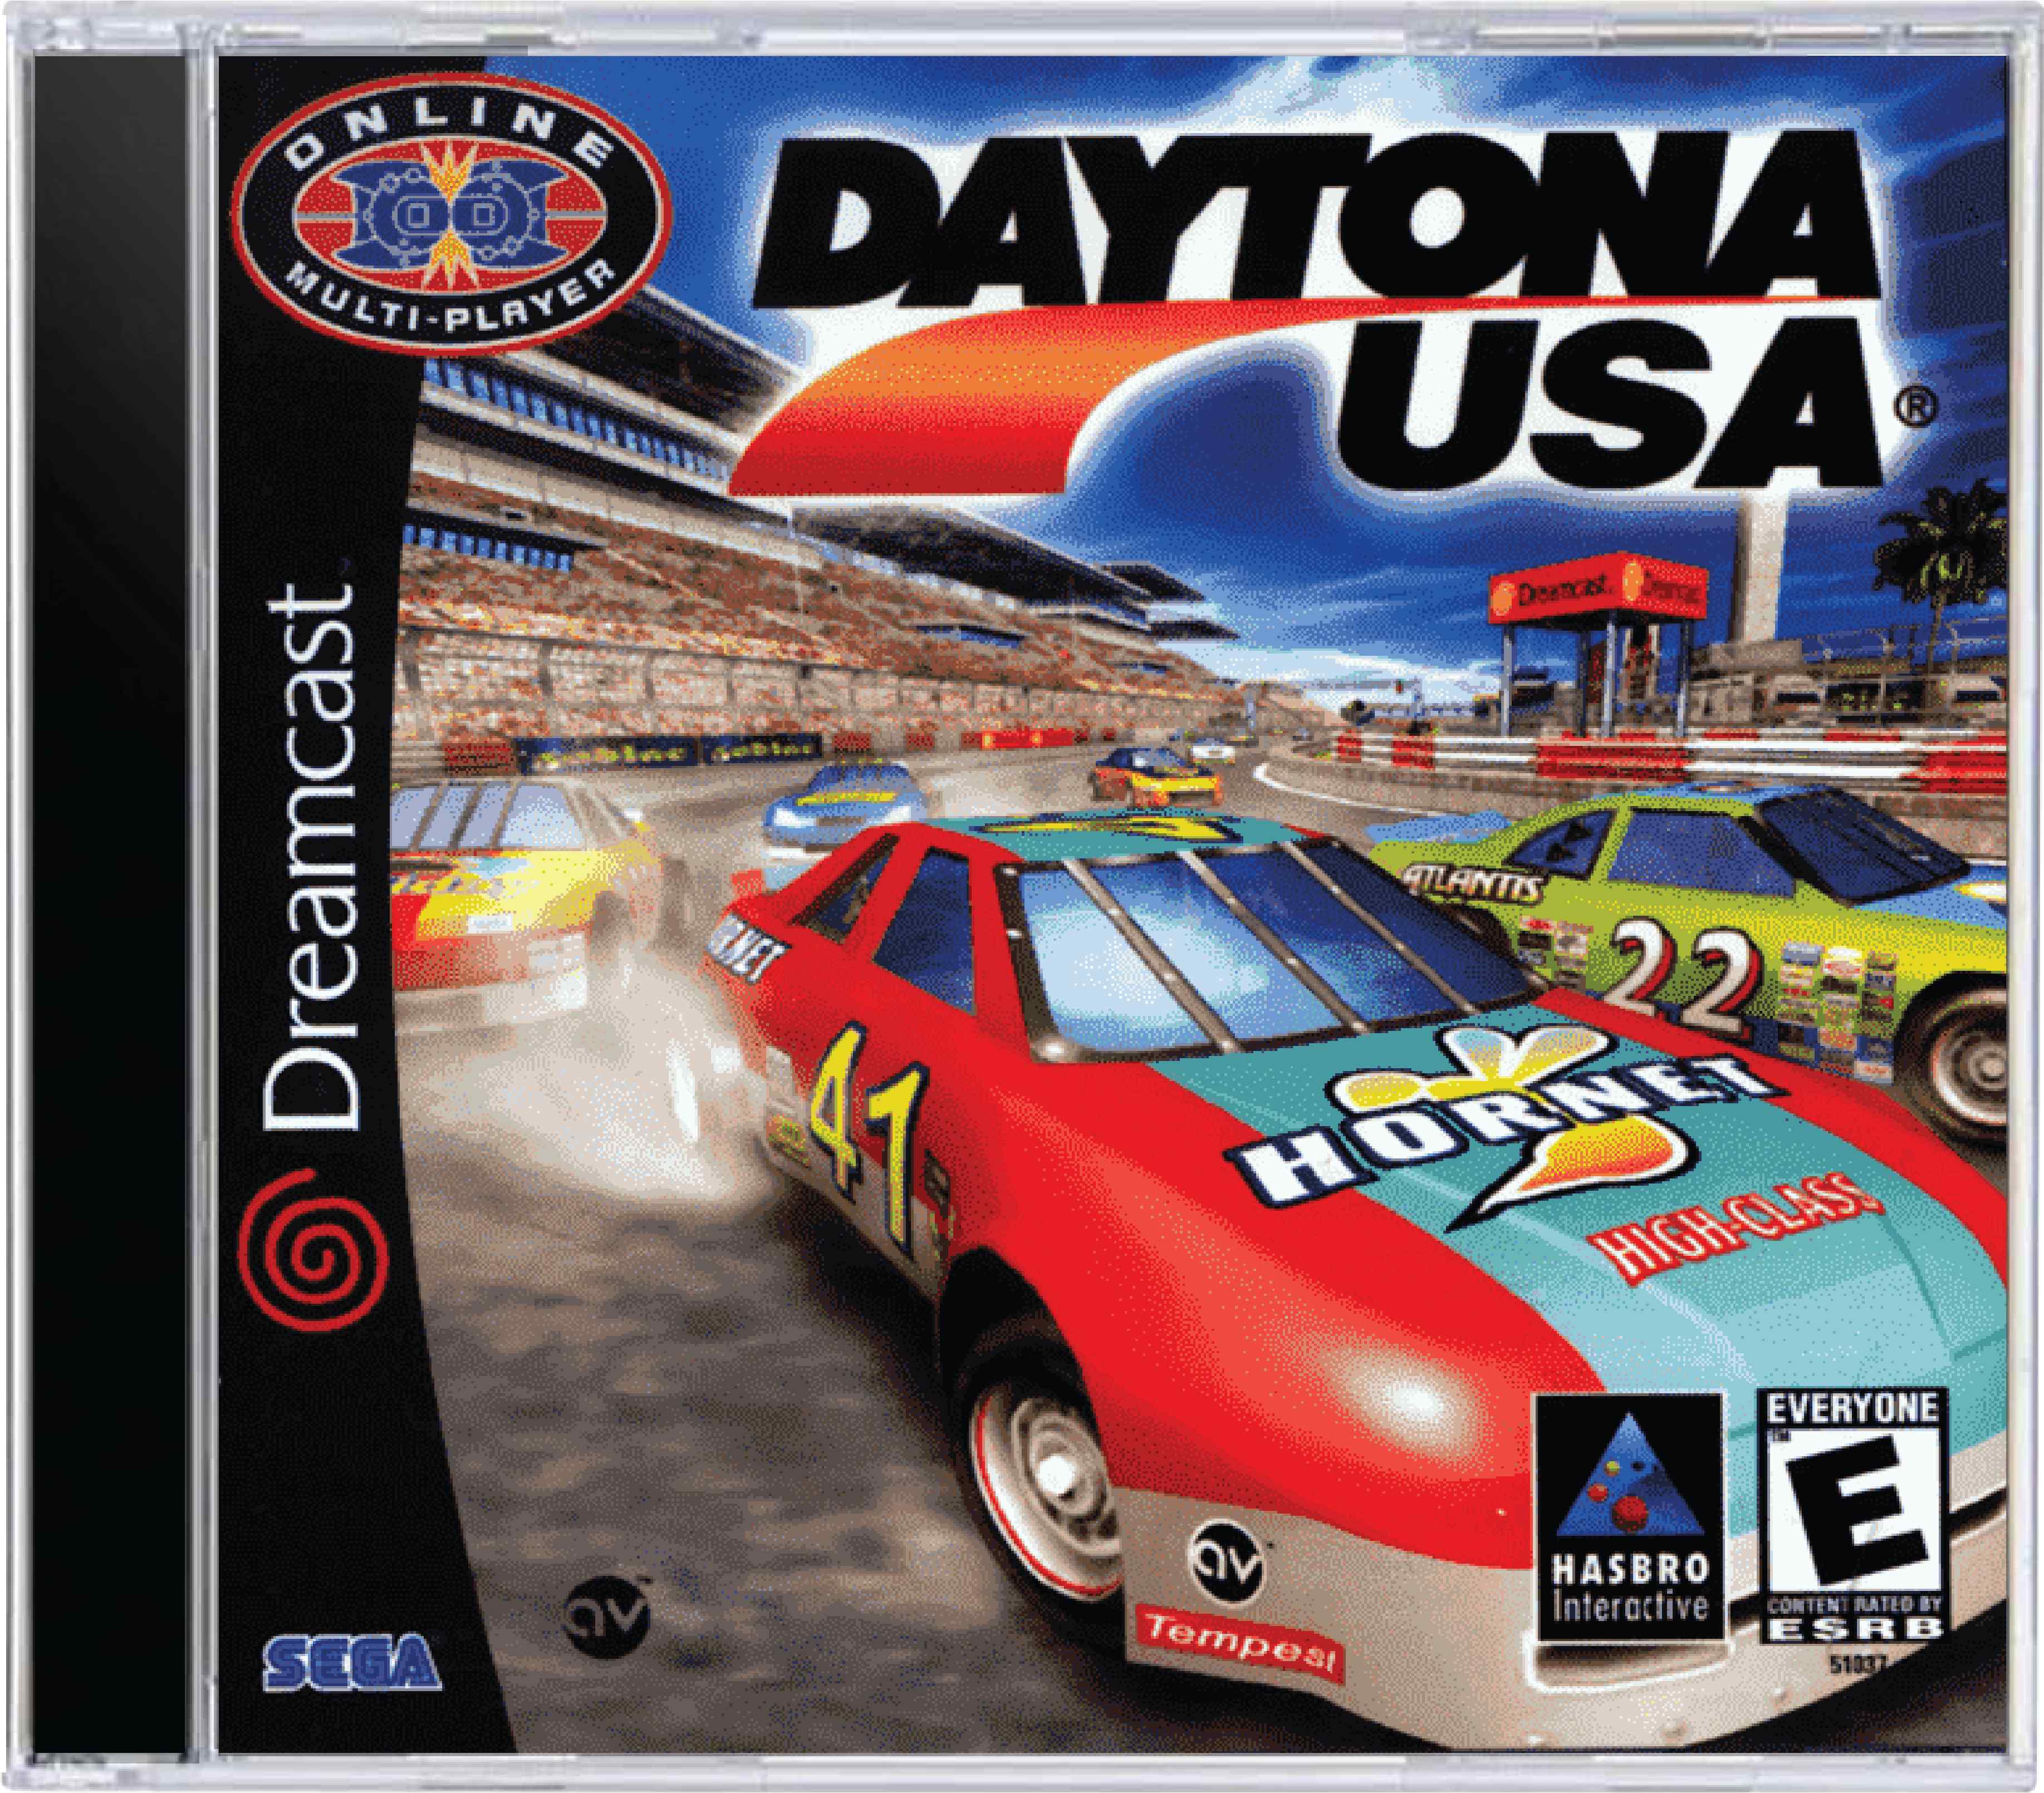 Daytona USA Cover Art